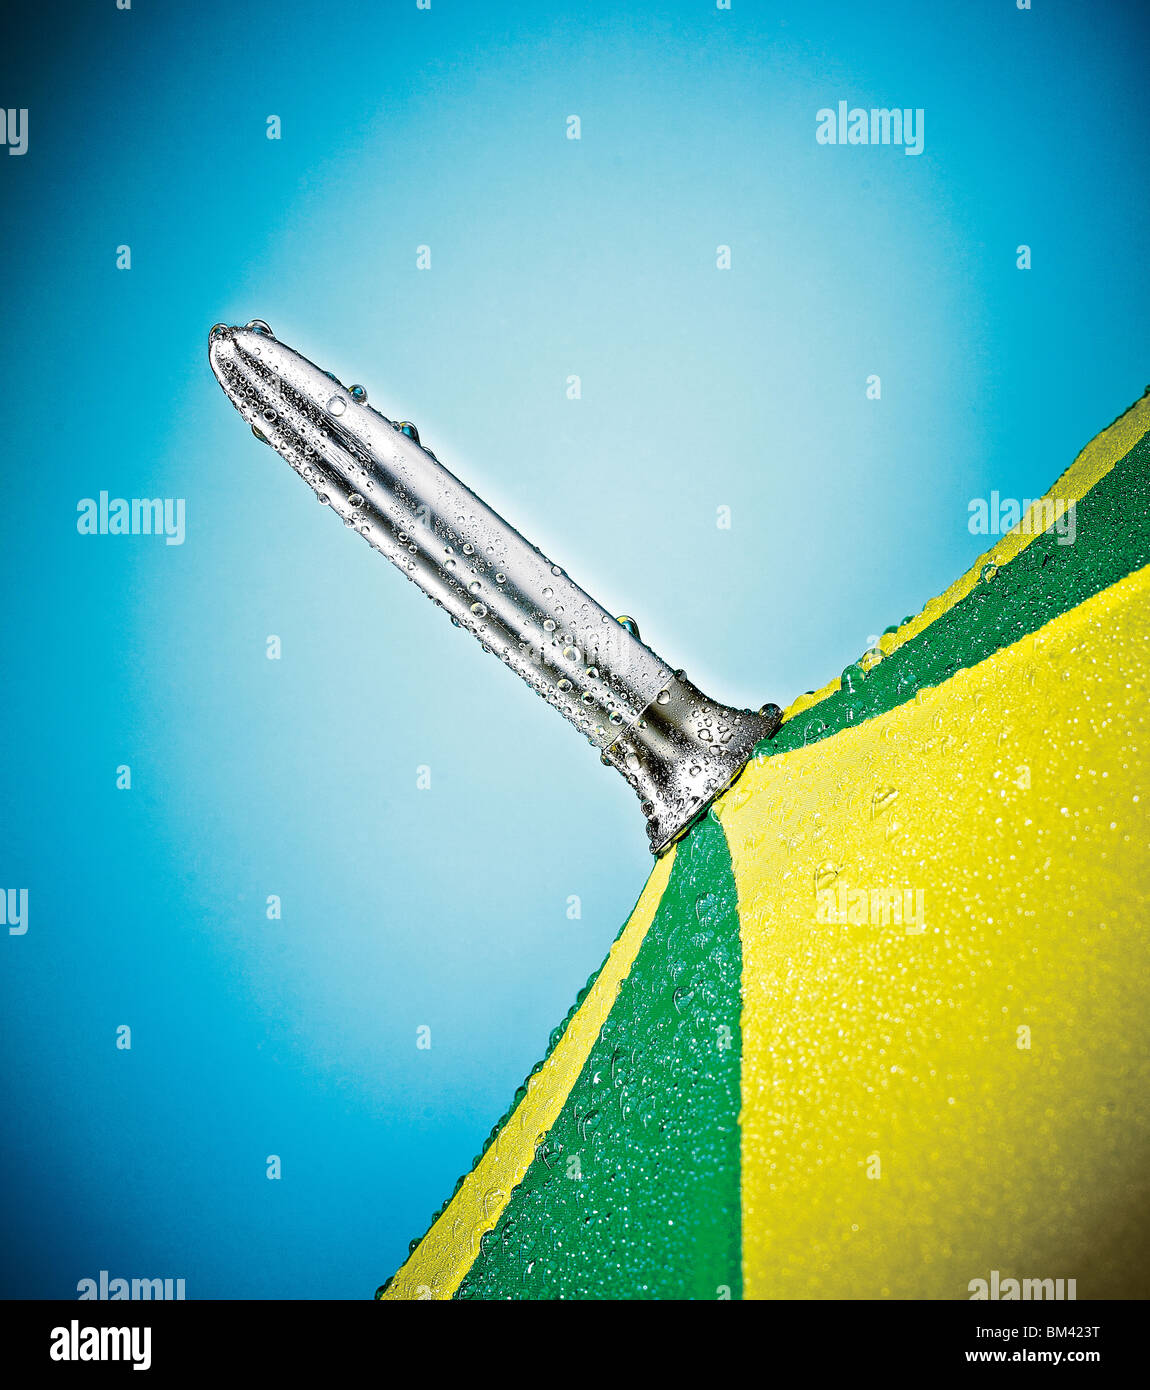 Close up of umbrella Stock Photo